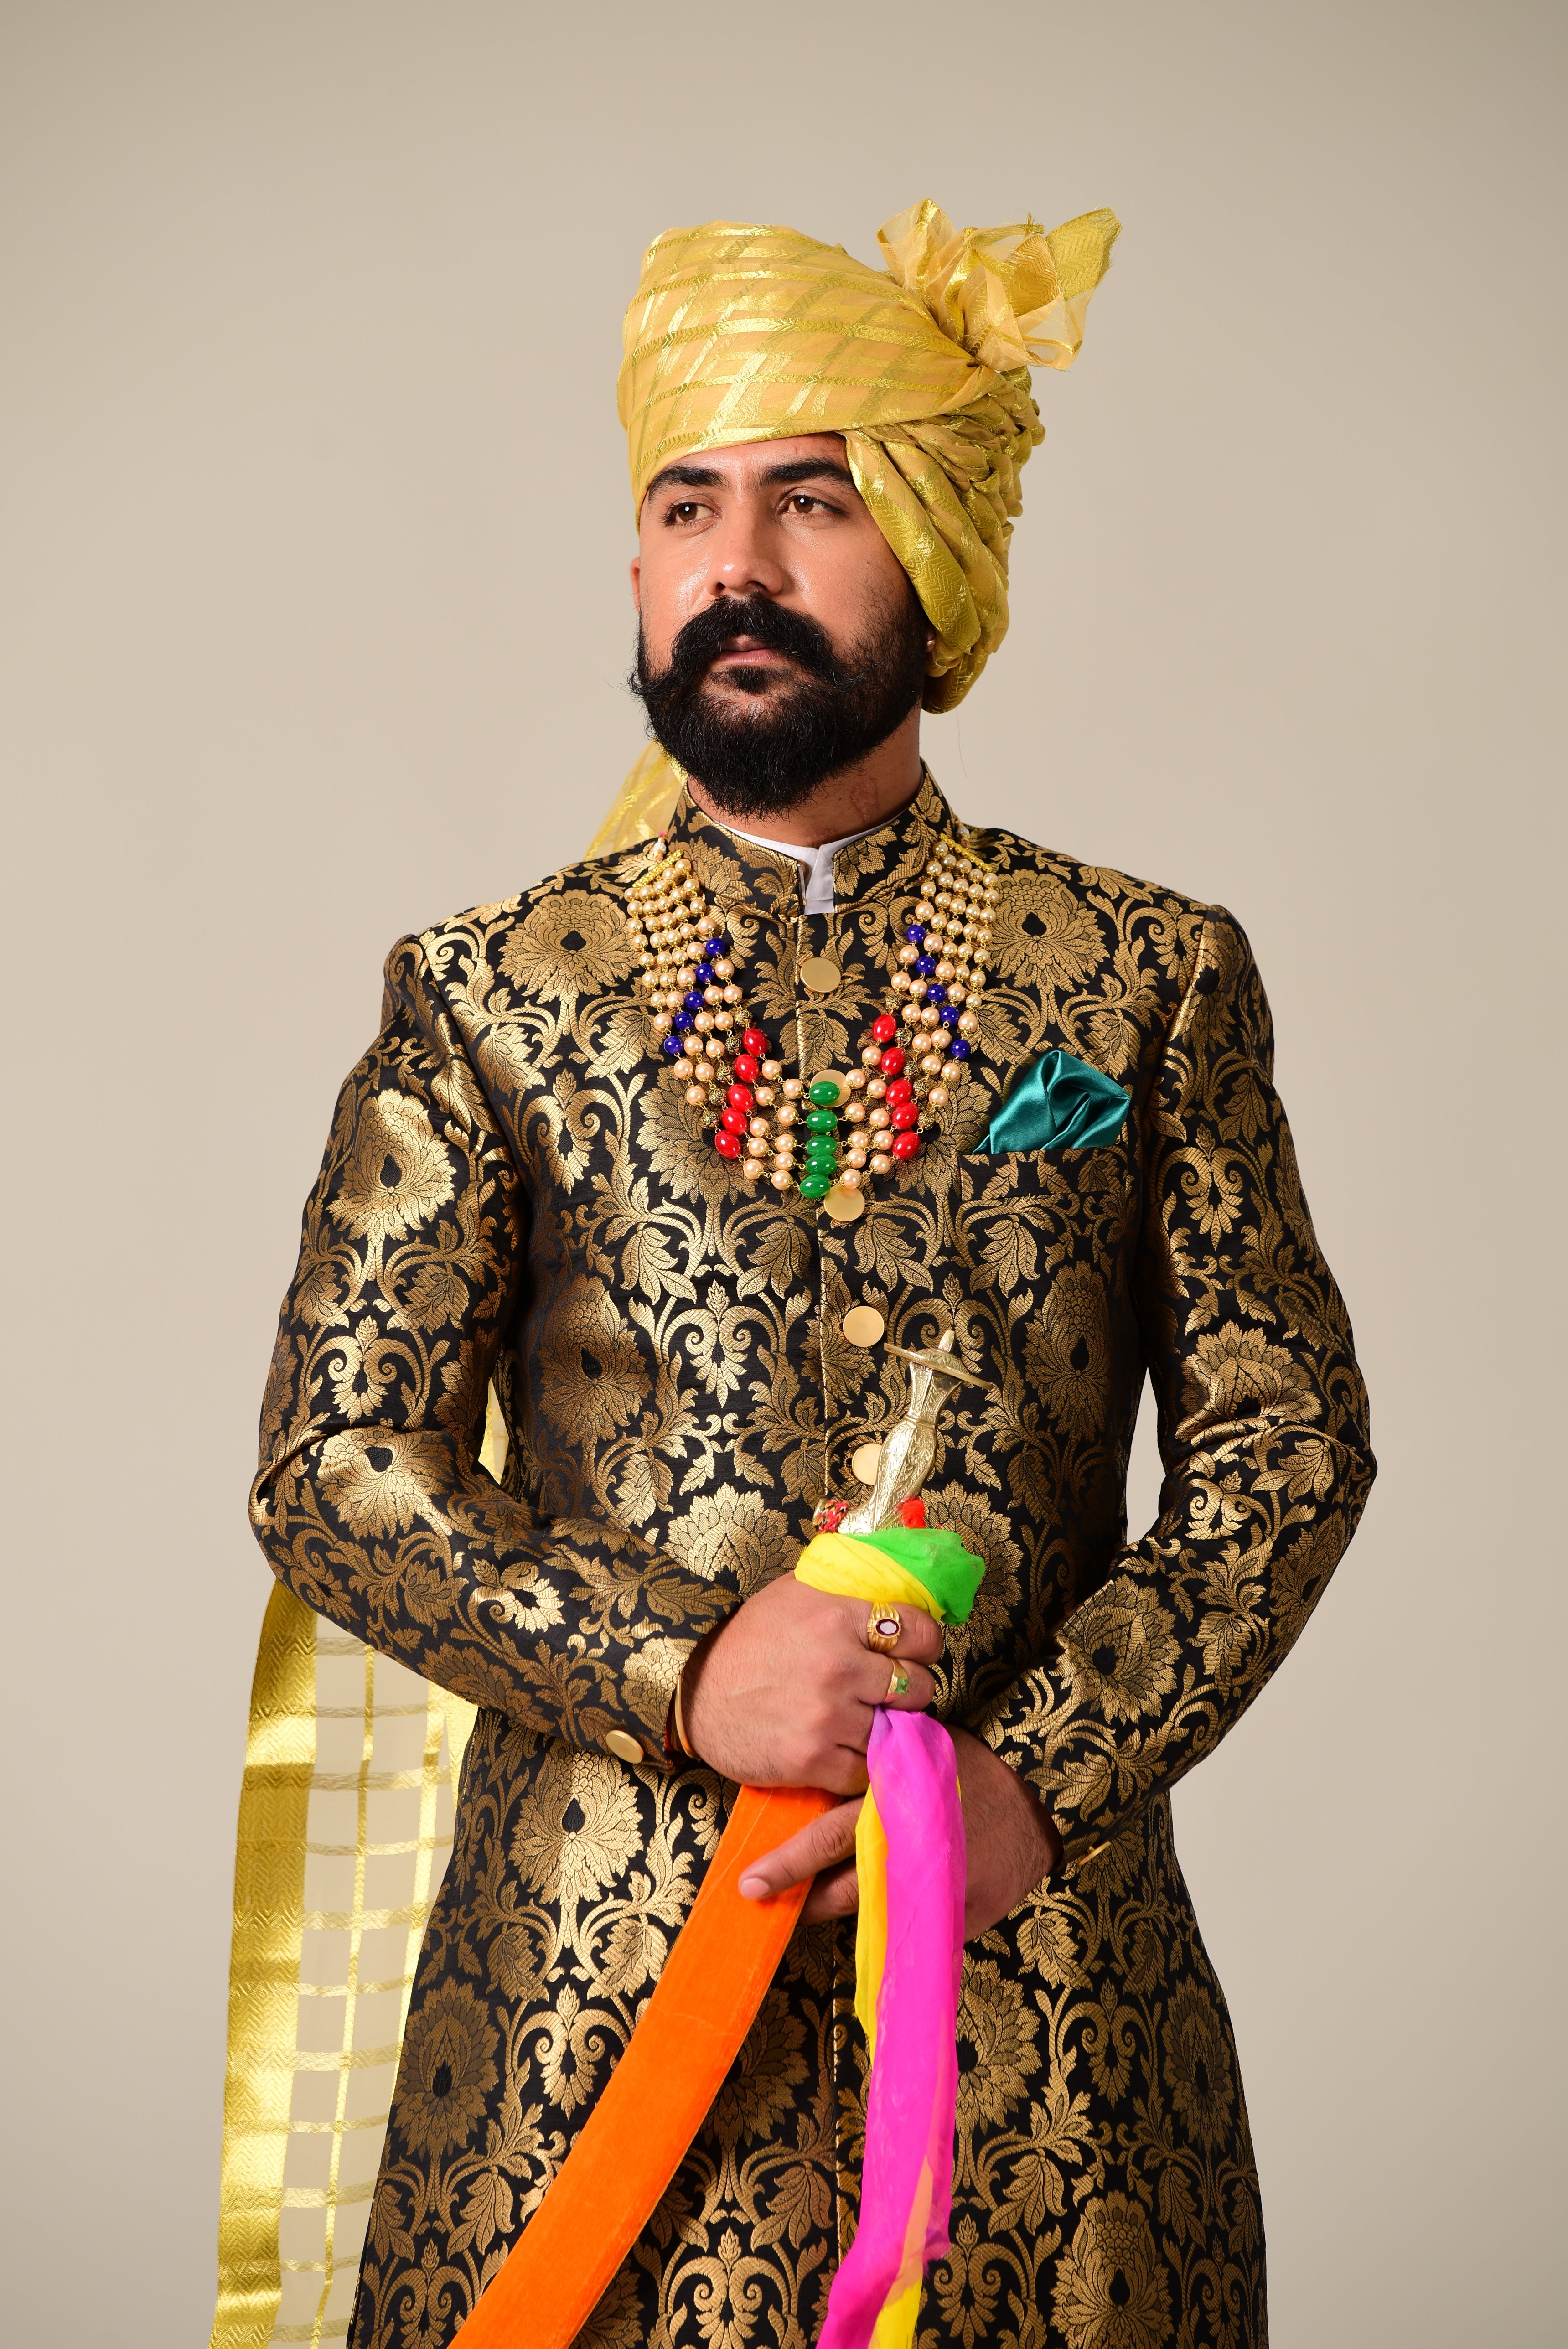 Elegant Hand-crafted Rajputana Styled Silky Smooth Velvet Sherwani /Achkan for Men | Indian Formal Kurta Style wear Perfect for Family Weddings & Grooms | Gold Black